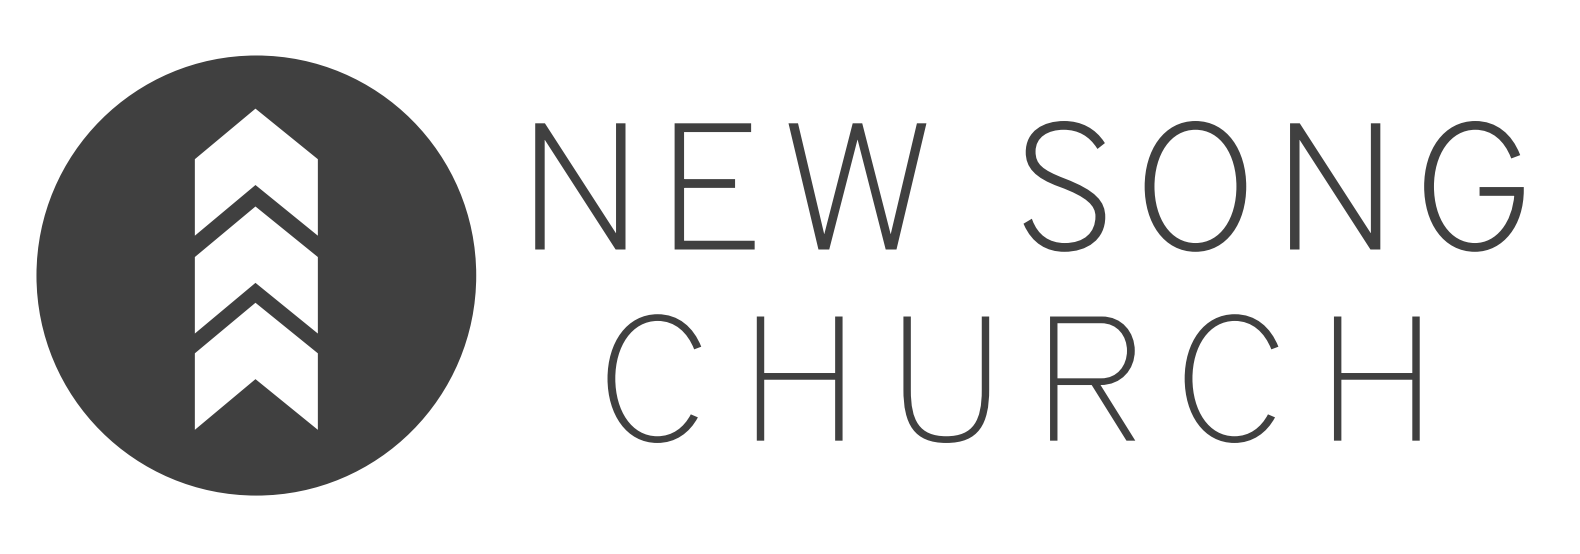 New Song Church